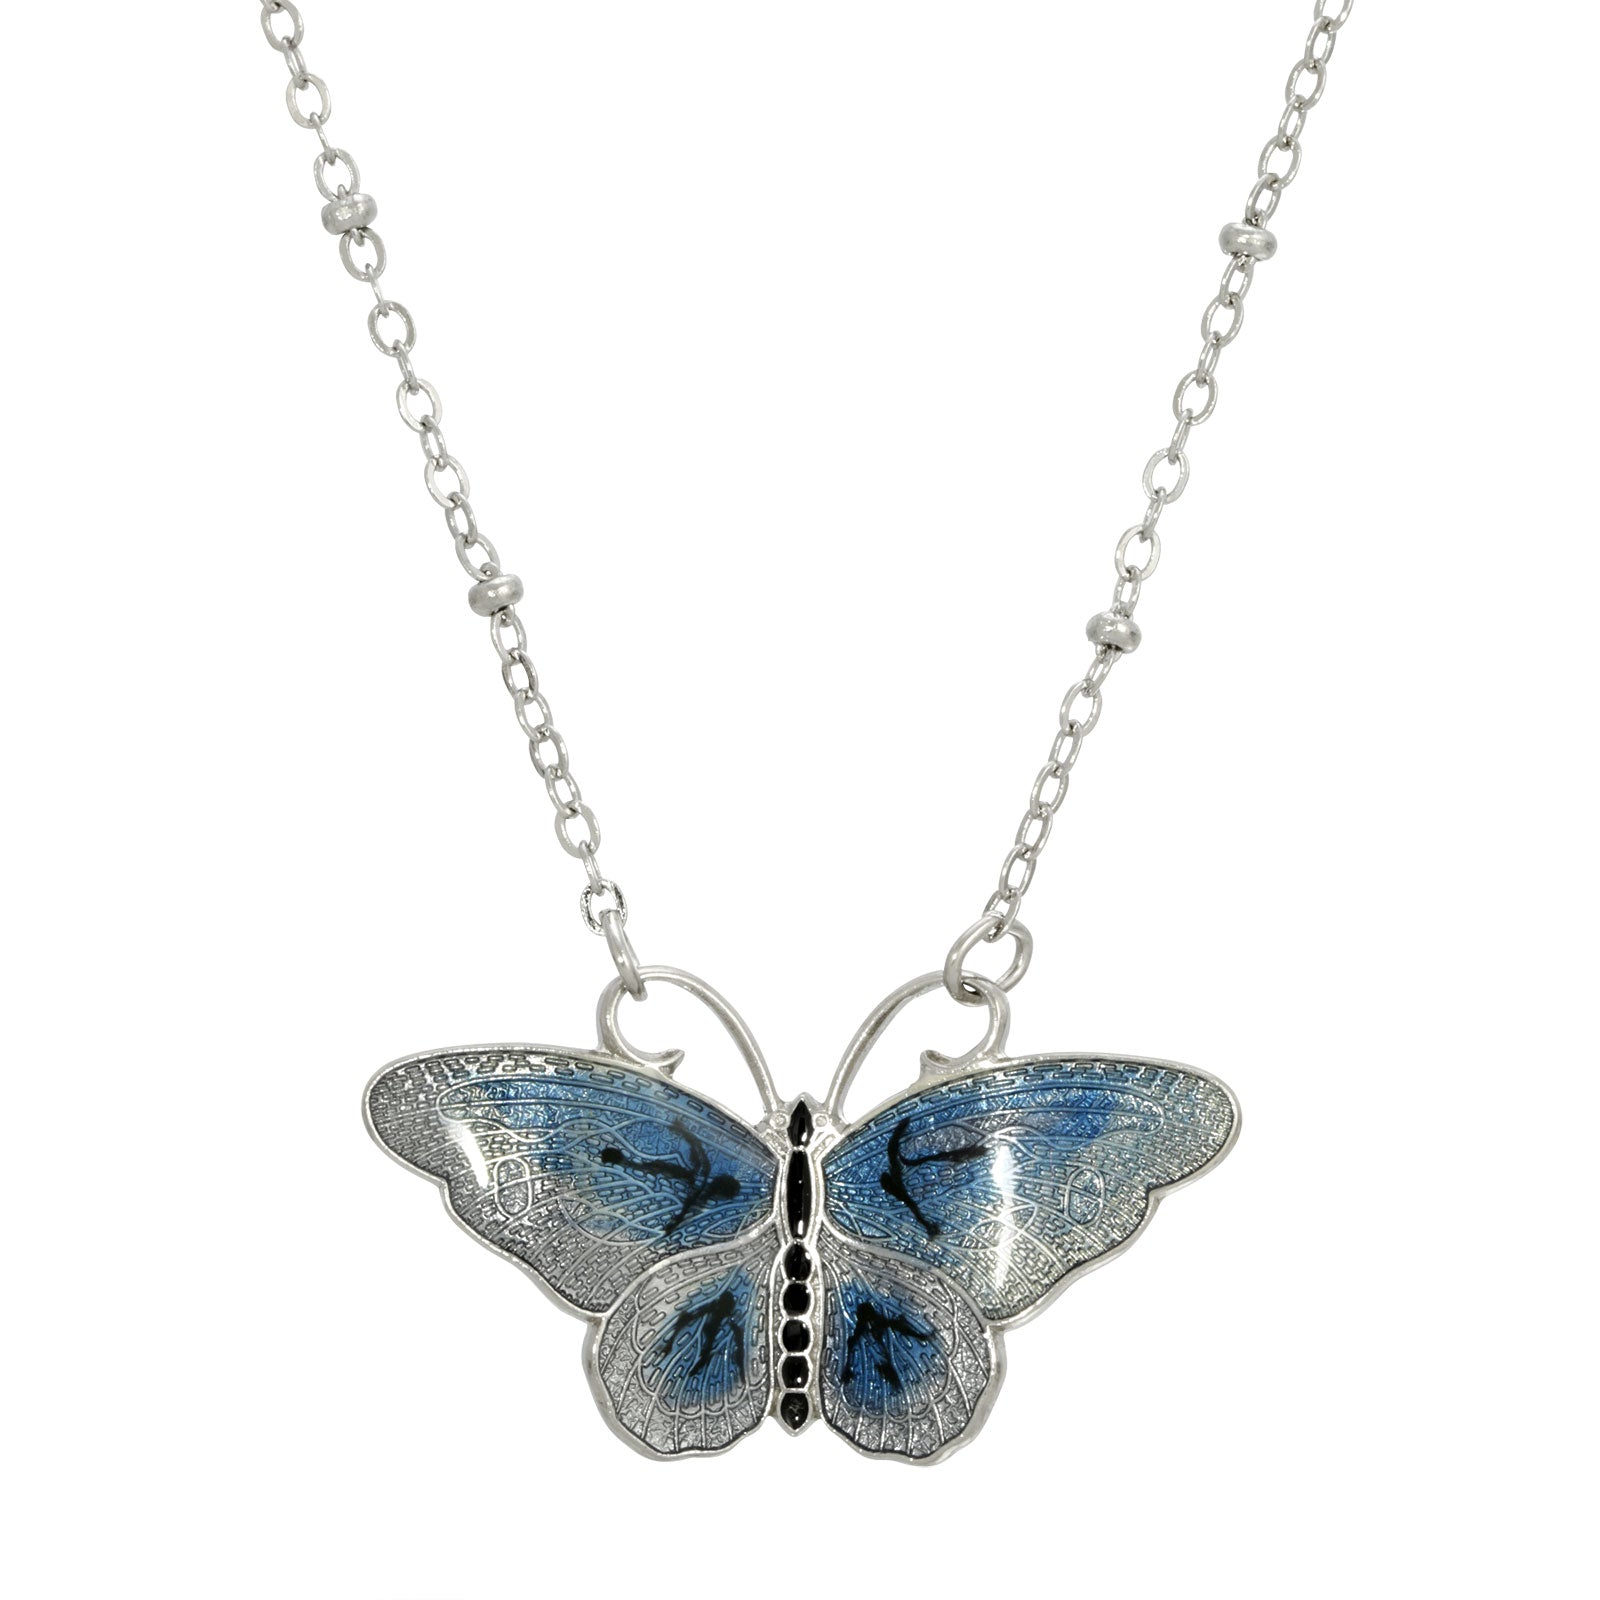 Silver-tone Blue And Black Enamel Butterfly Necklace 16”Adj.